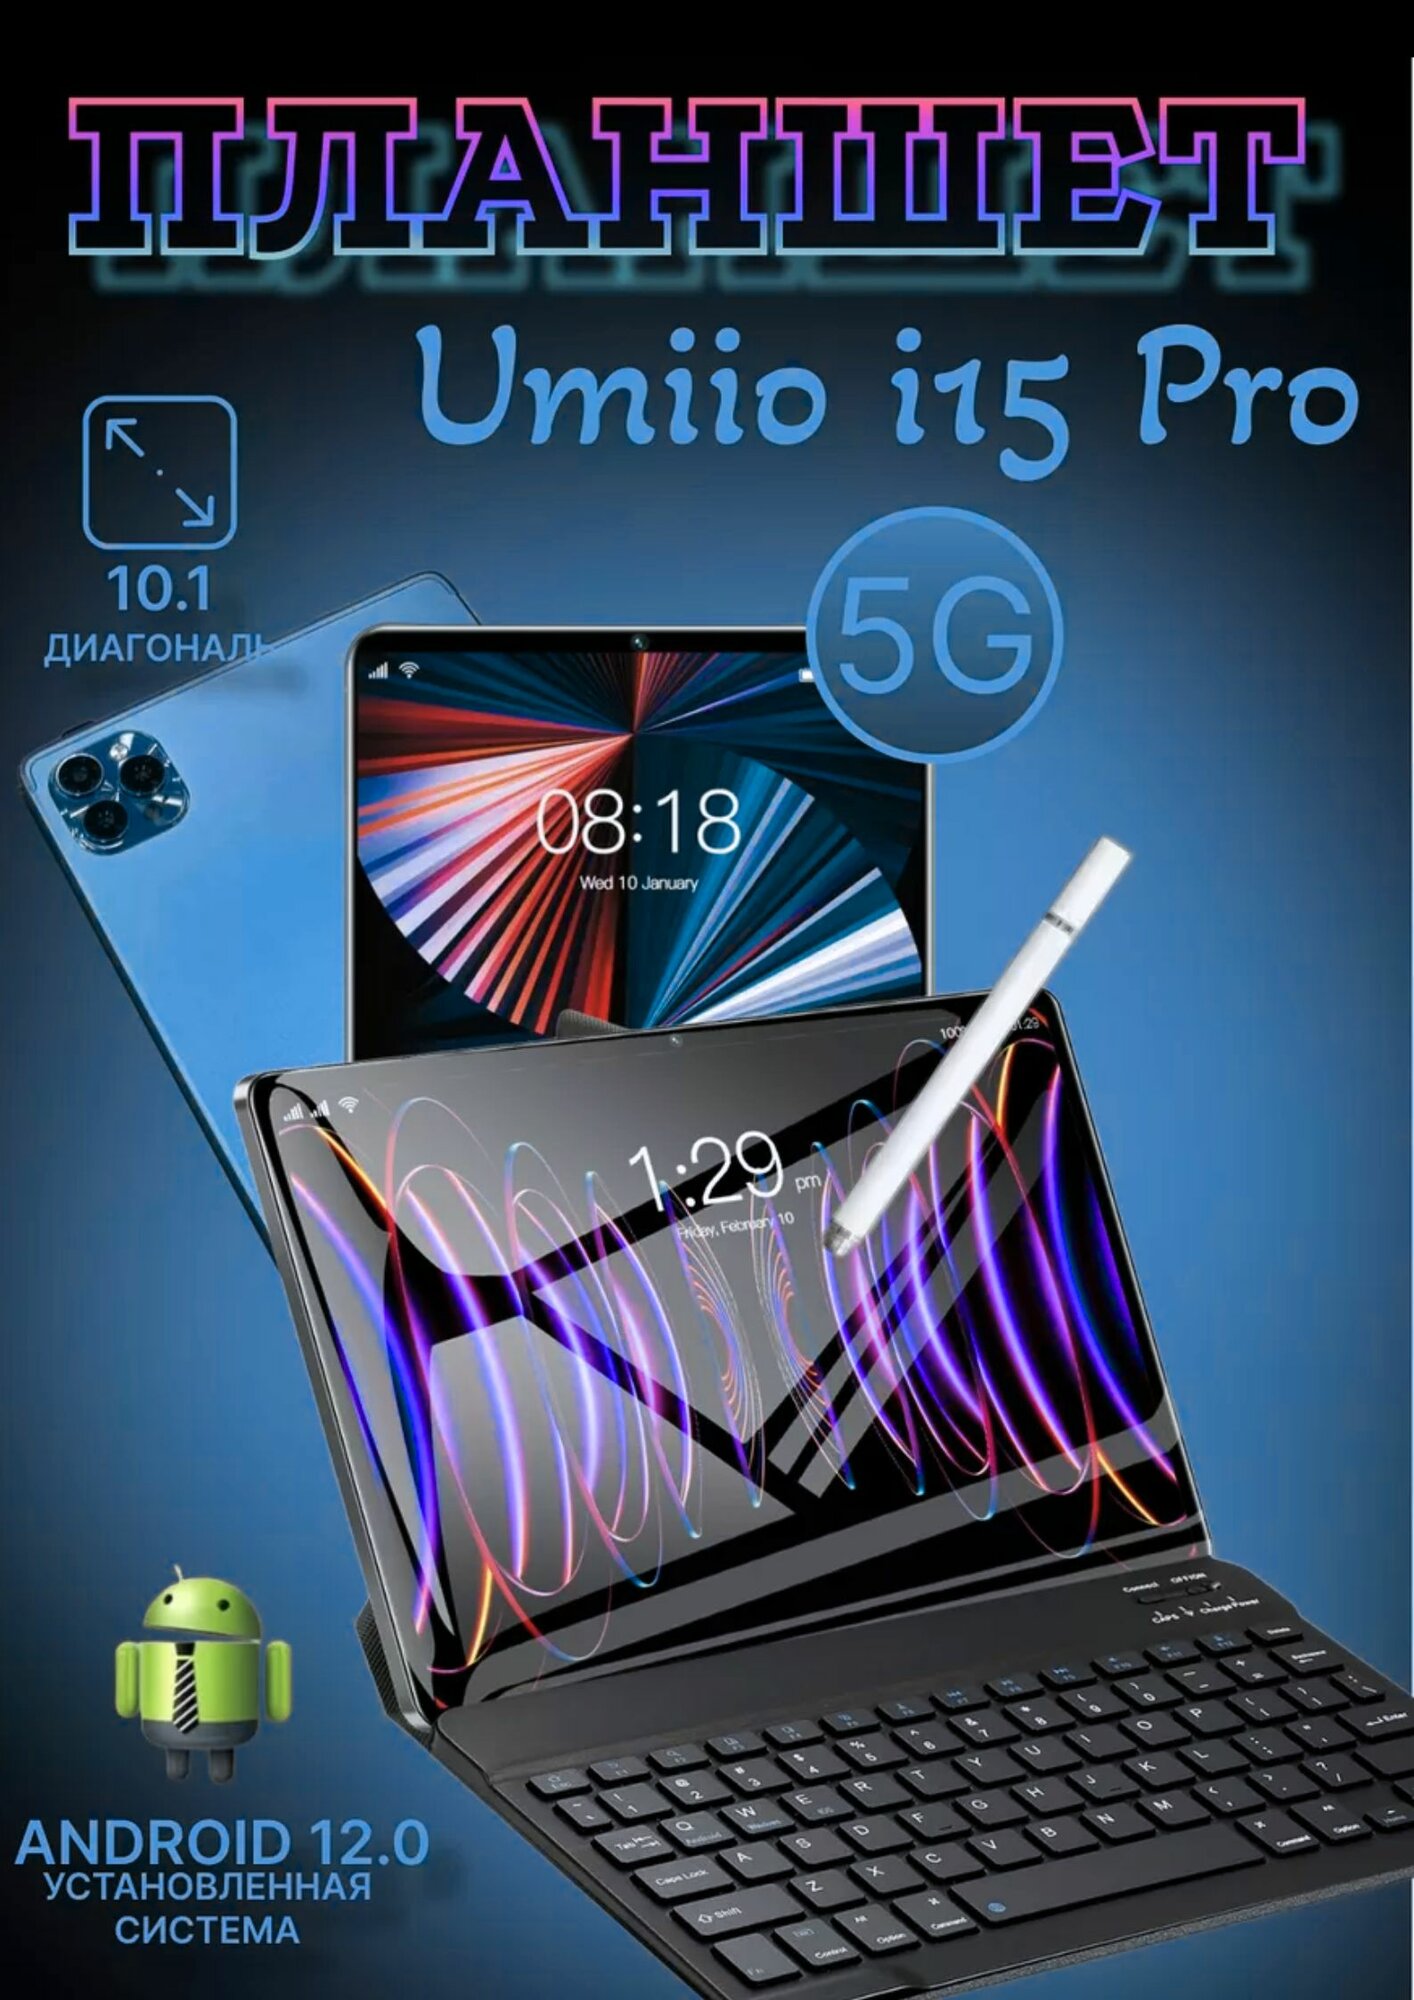 Планшет с клавиатурой Umiio i15 pro 6/128 Gb, ANDROID 12, 7000 мА*ч, Синий